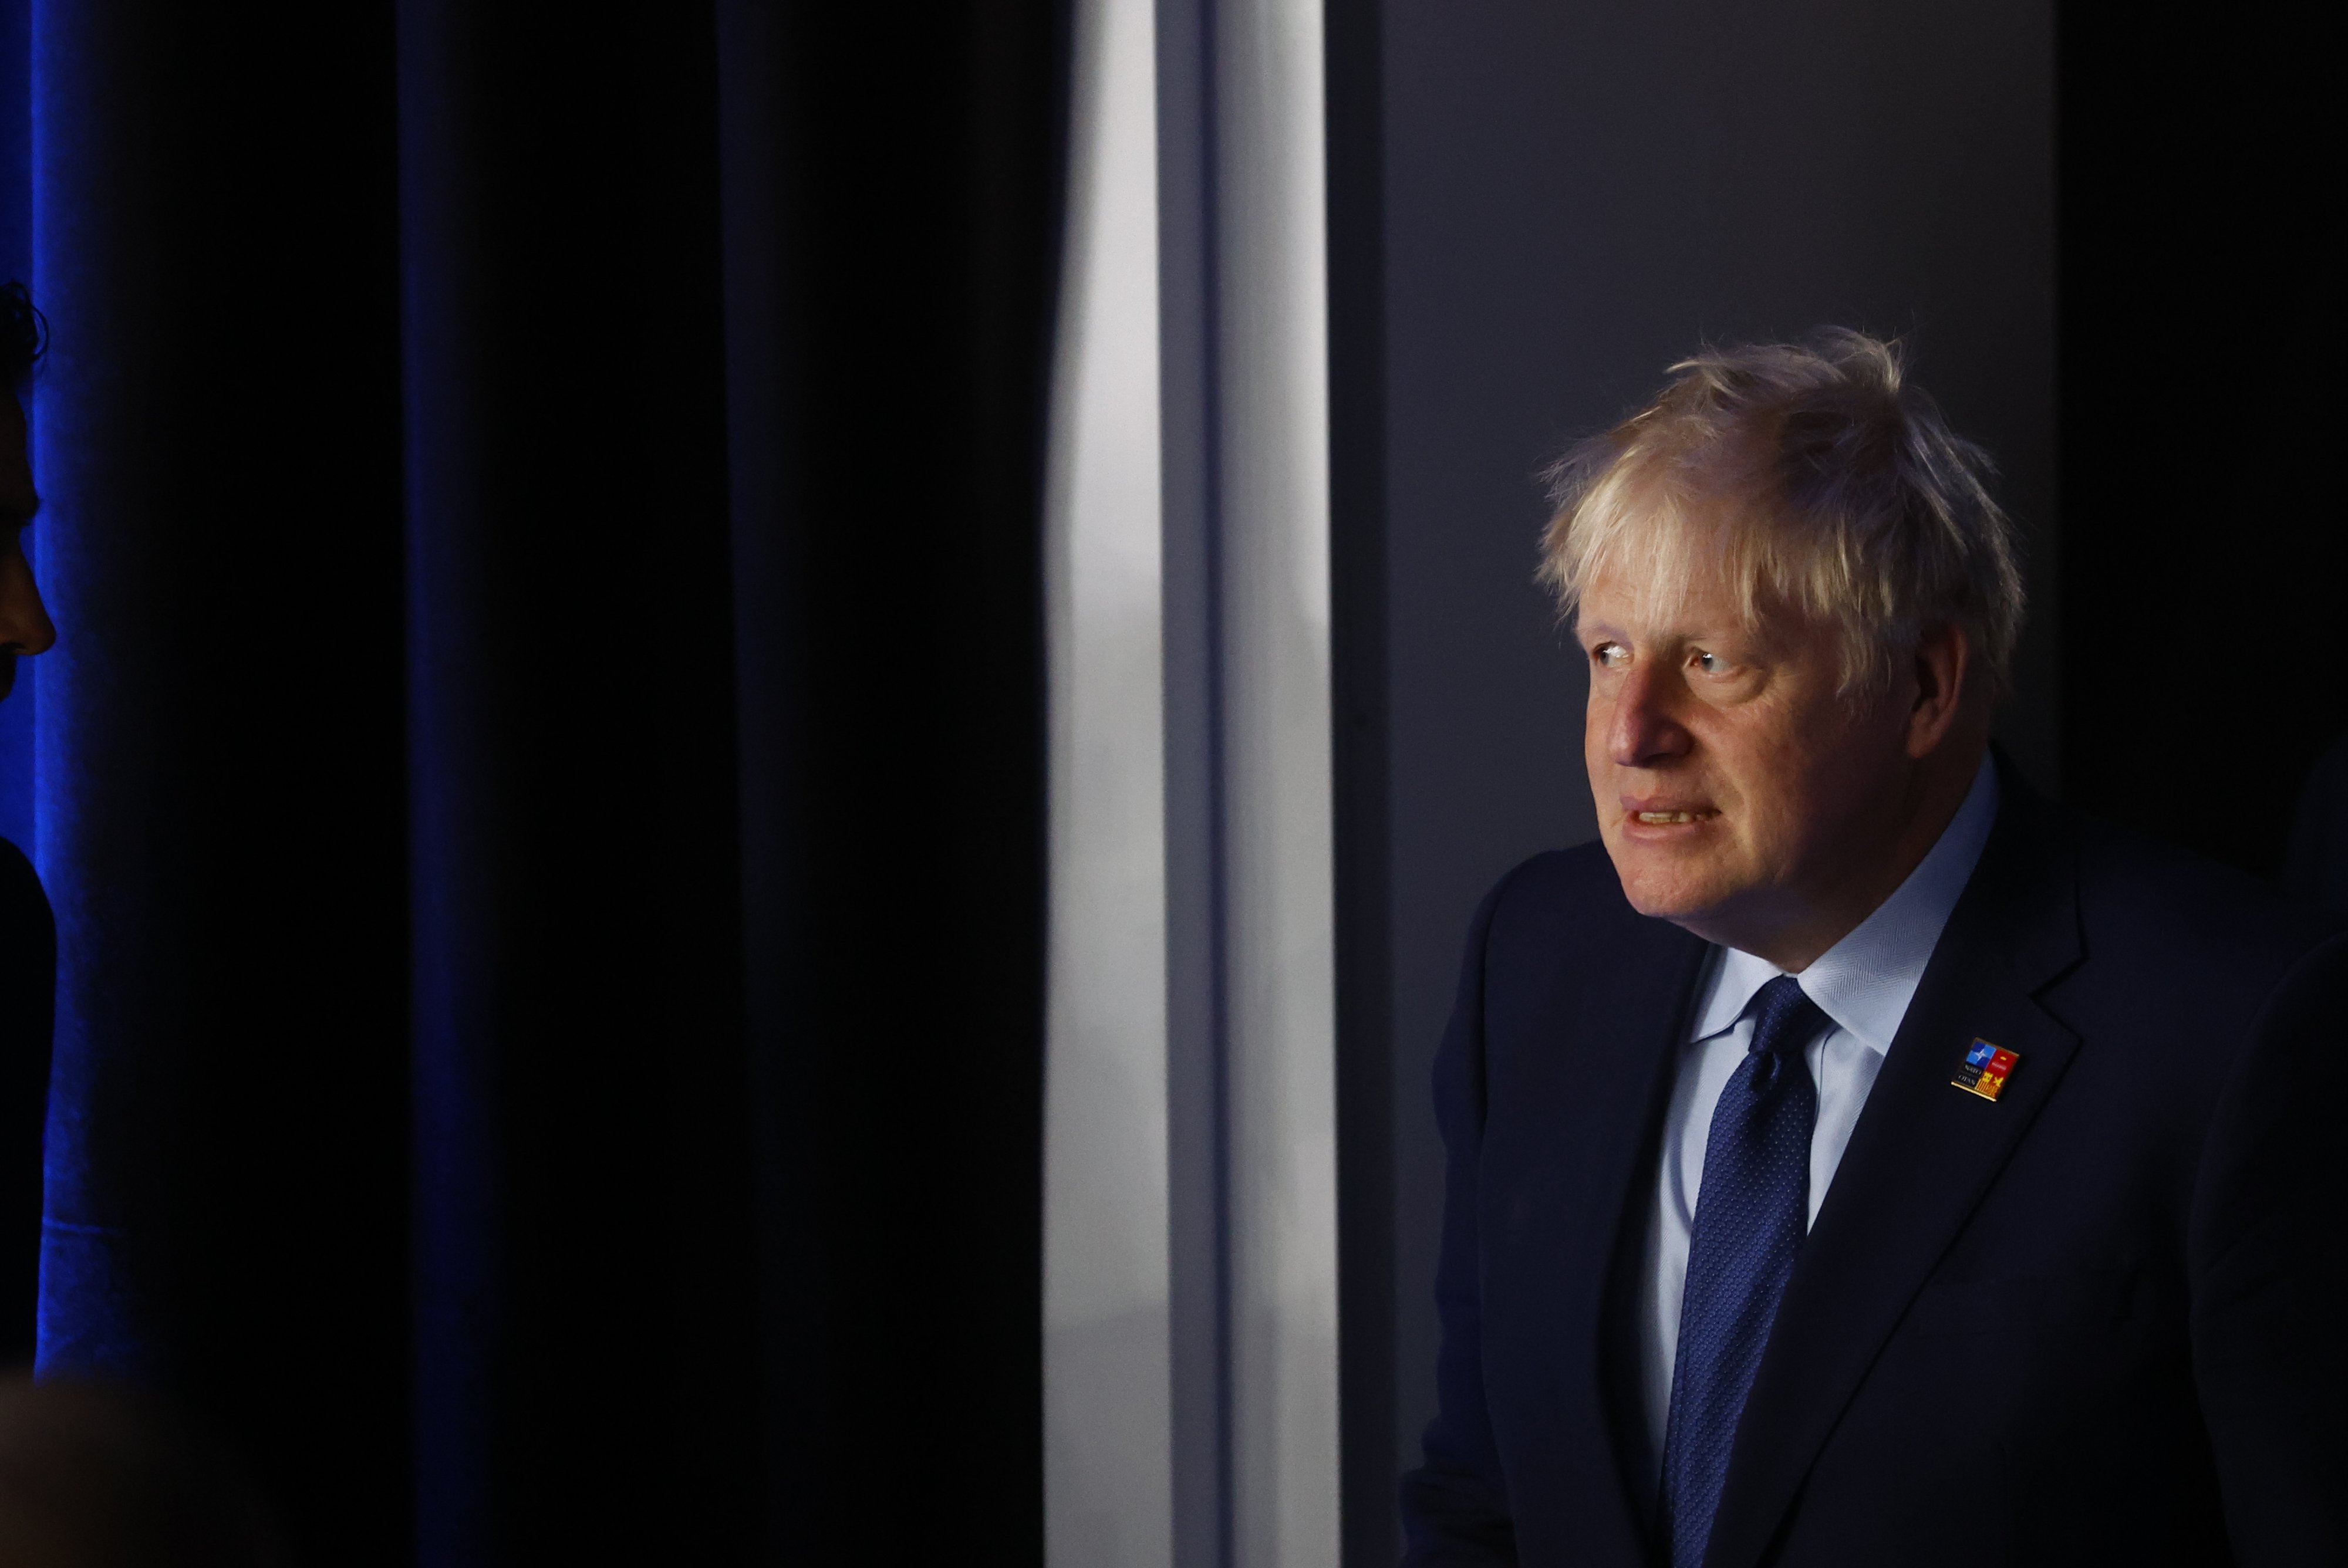 Primer ministre Regne Unit Boris Johnson segona jornada cimera OTAN Ifema Madrid plà mitjà / Foto: Efe